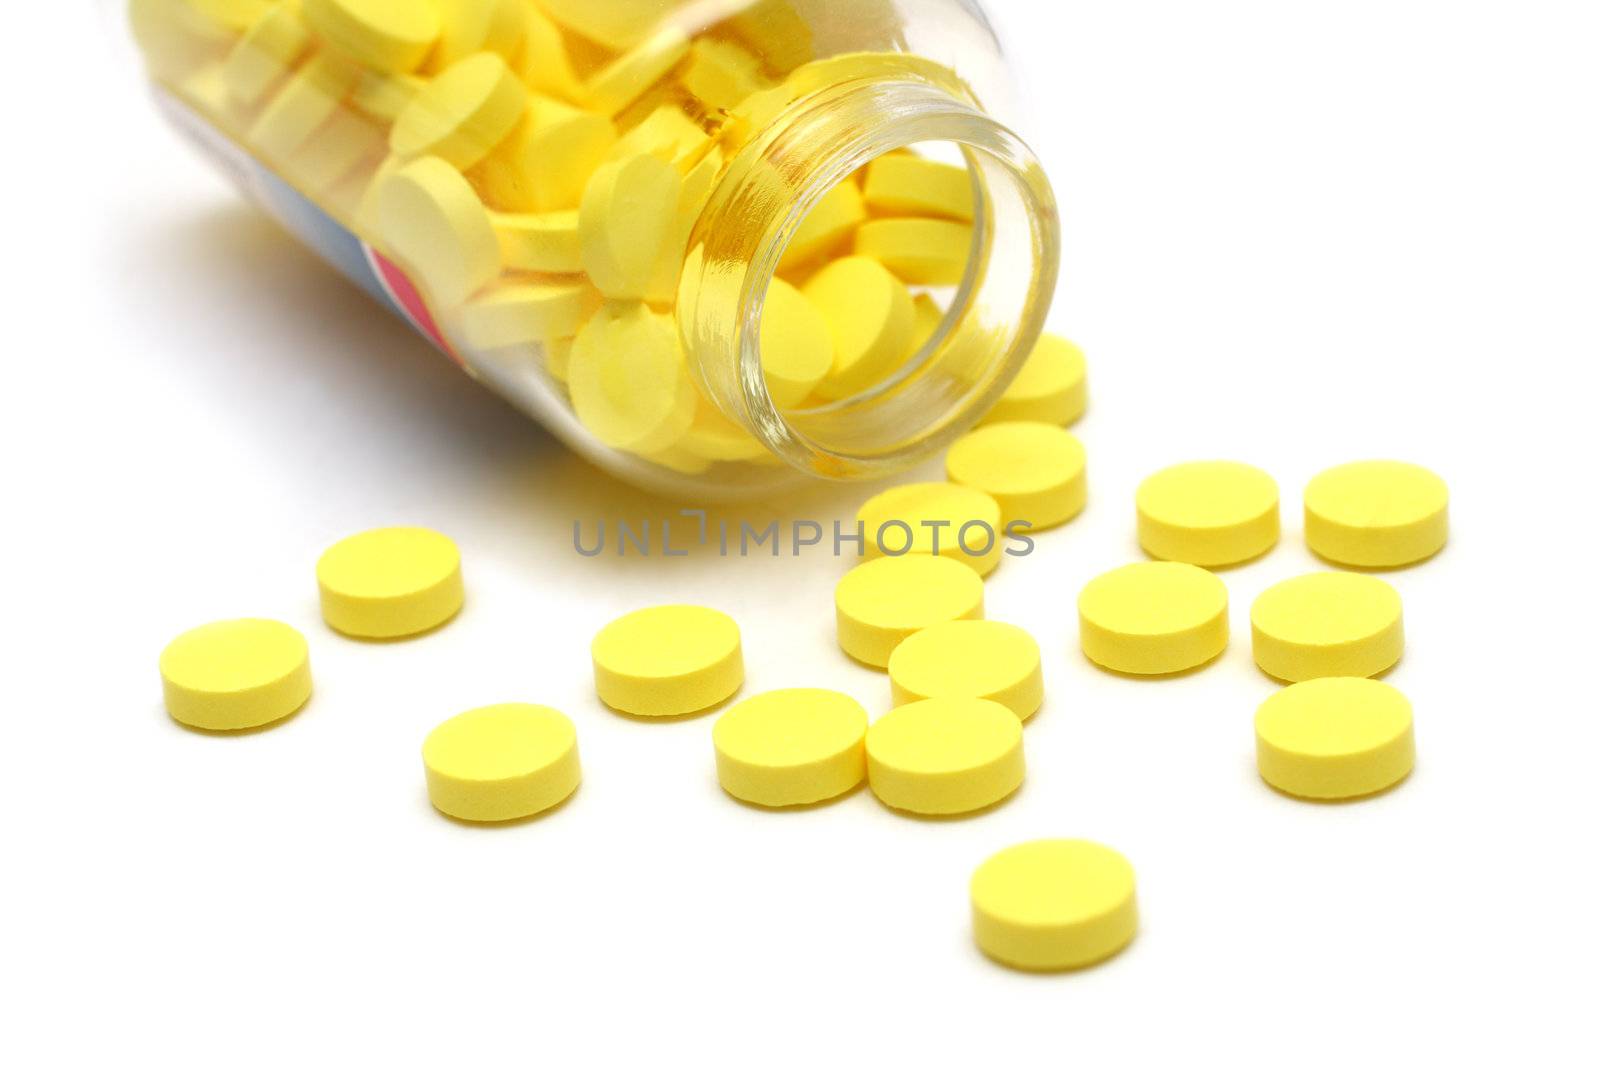 yellow pills around transparent bottle on white background